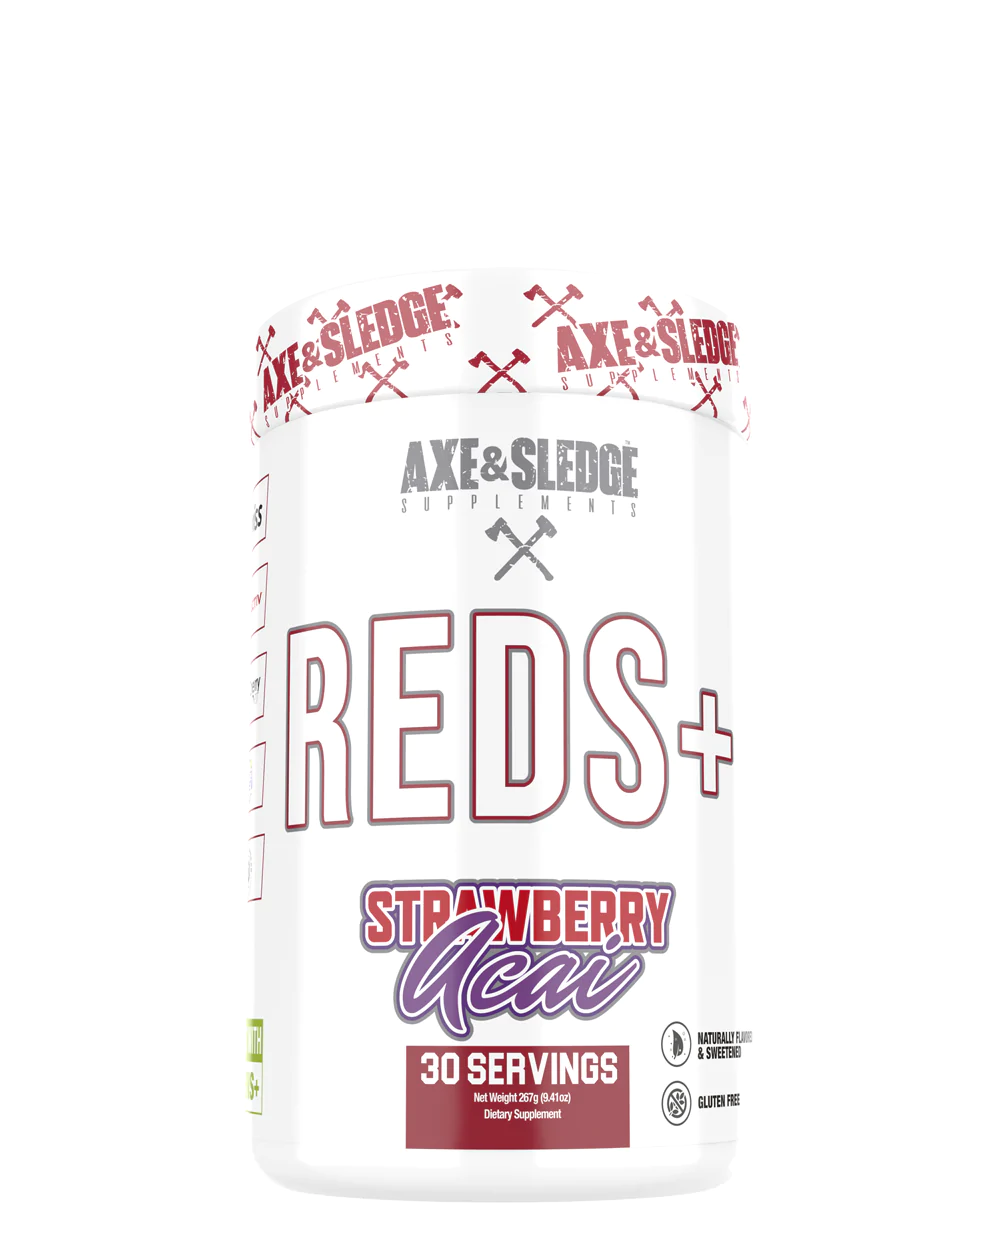 Axe & Sledge - Reds+